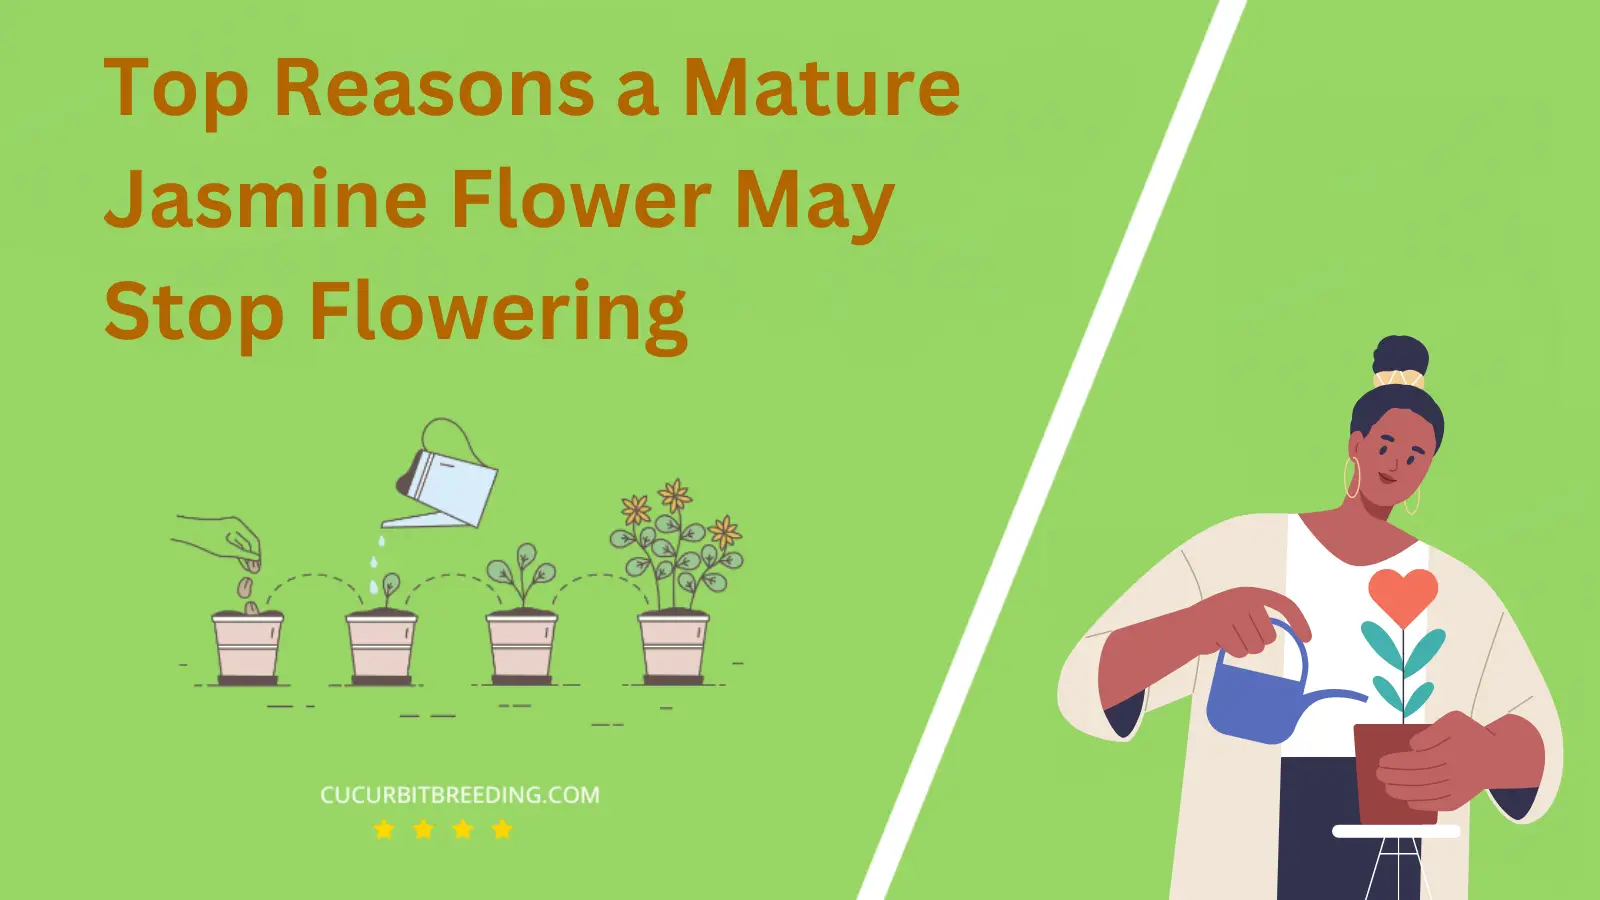 Top Reasons a Mature Jasmine Flower May Stop Flowering